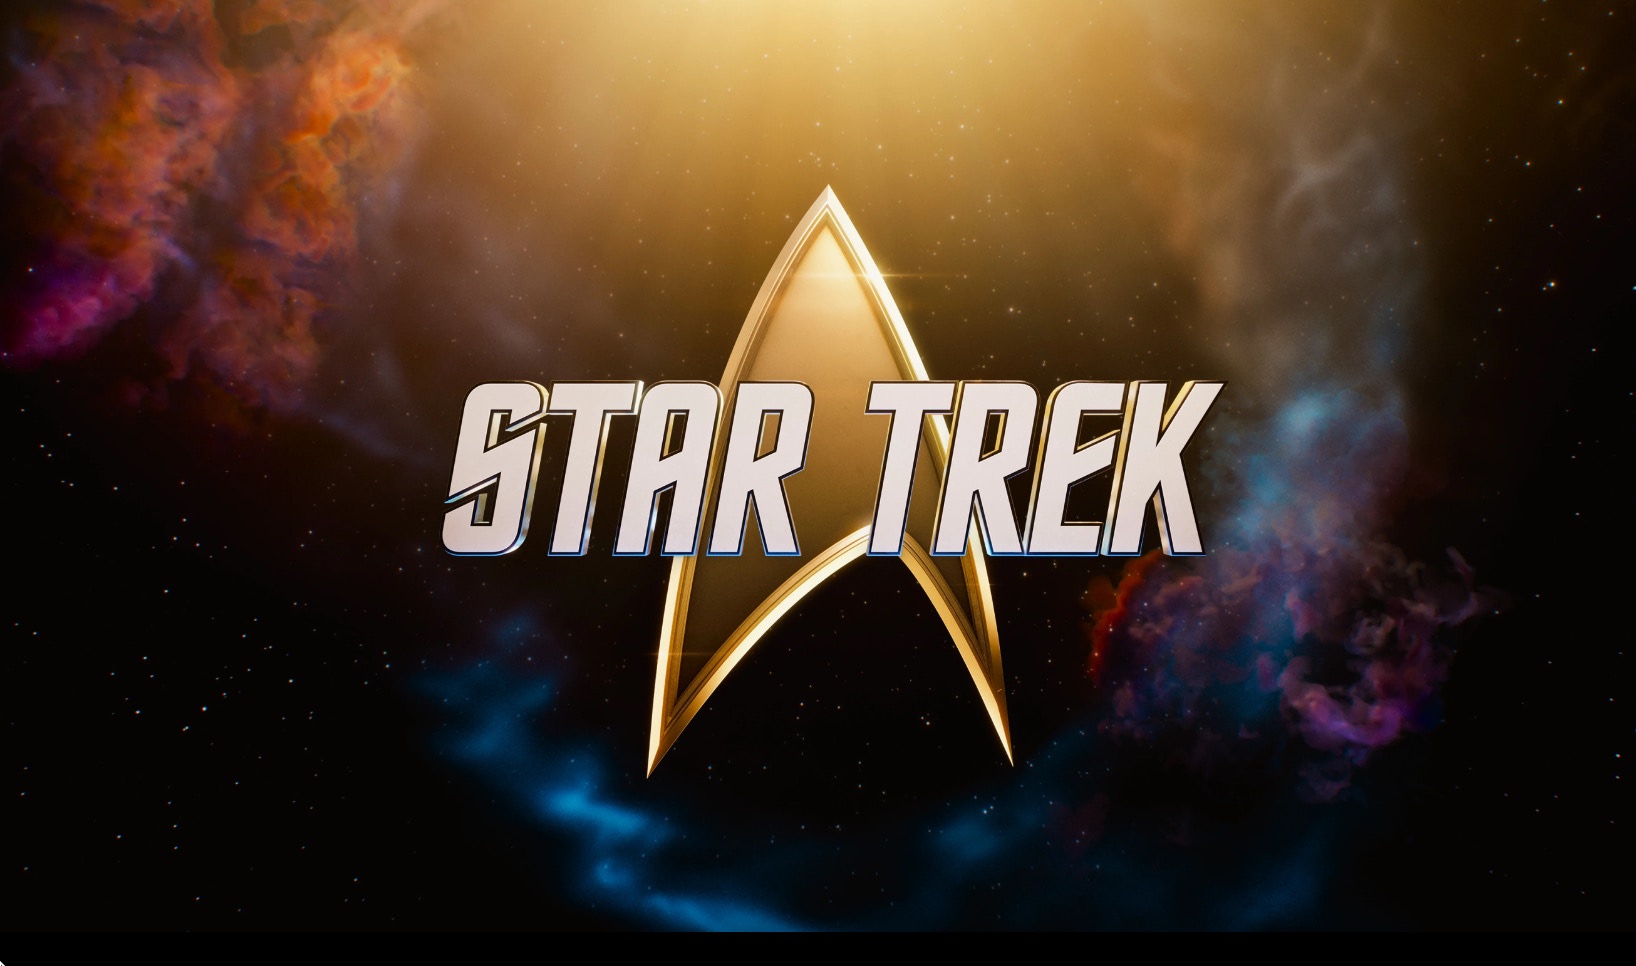 Star Trek: Sektion Neuer angekündigt